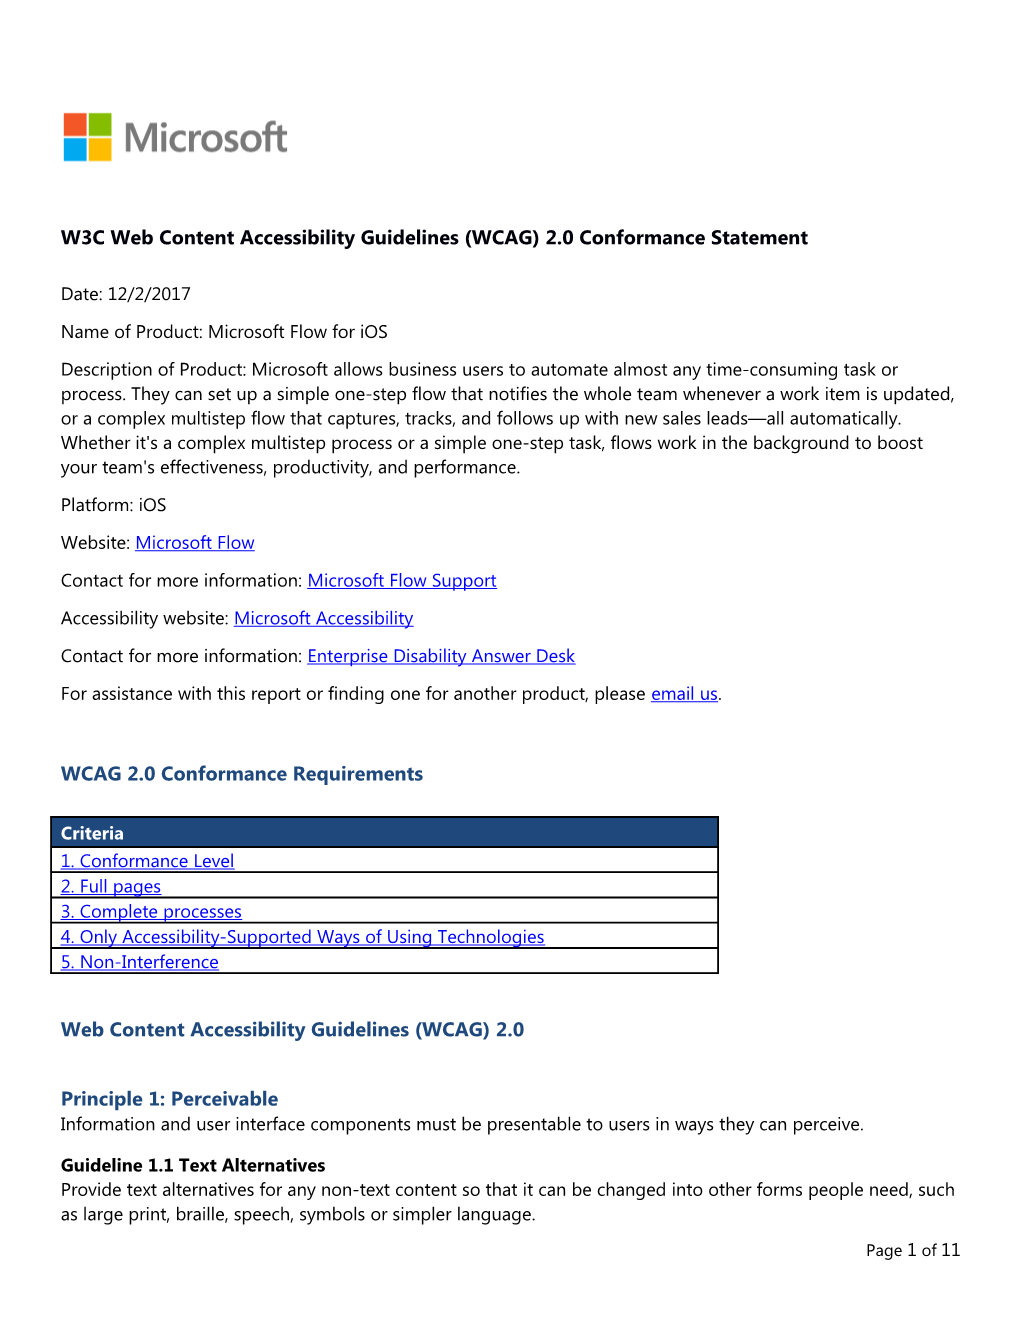 W3C Web Content Accessibility Guidelines (WCAG) 2.0 Conformance Statement s11